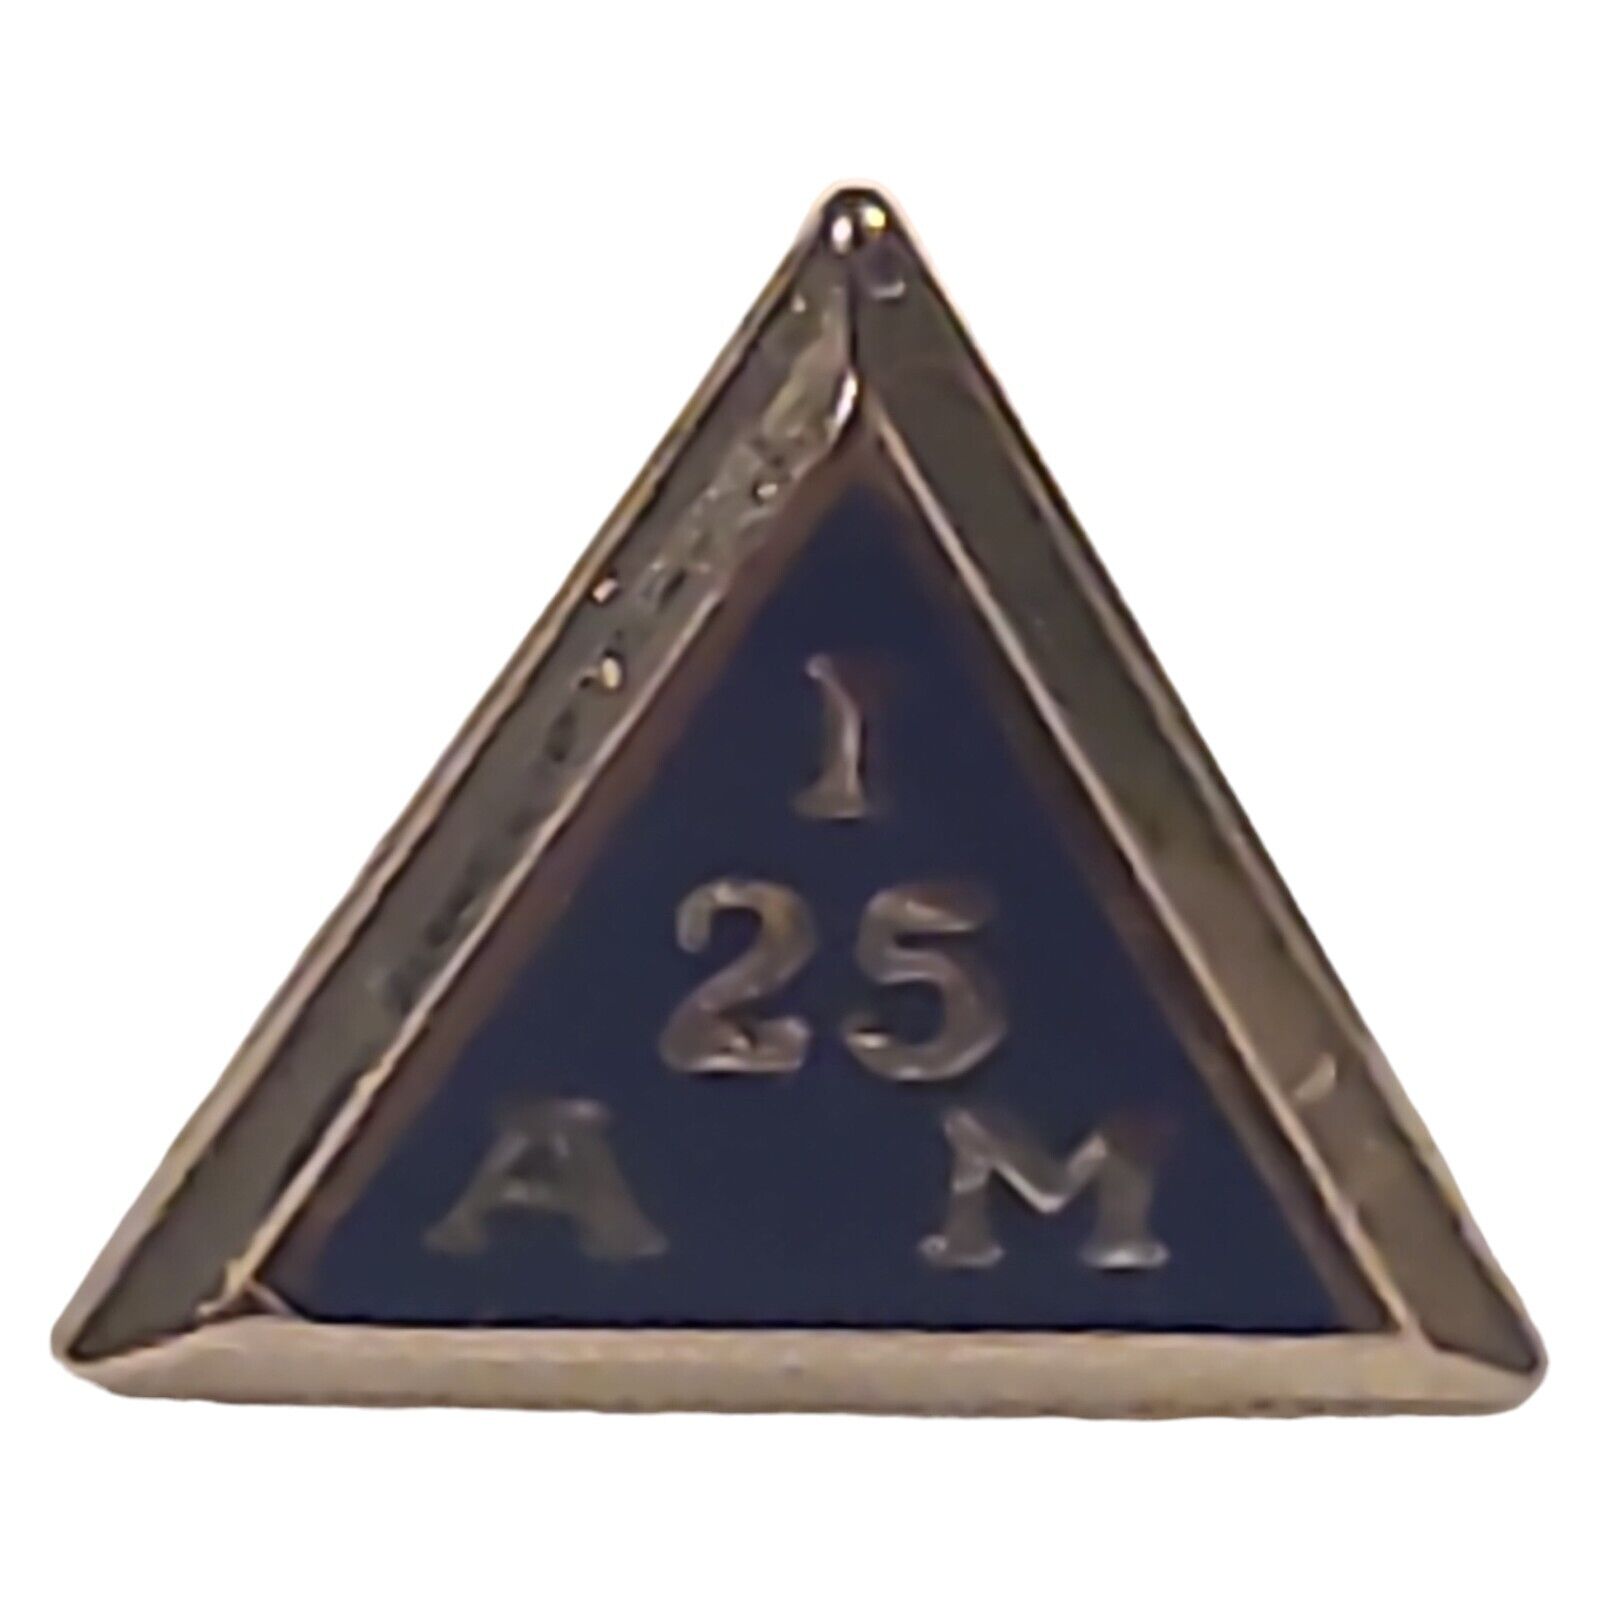 IAM 25 Year Pin International Association Of Machinists Union Sterling Silver925